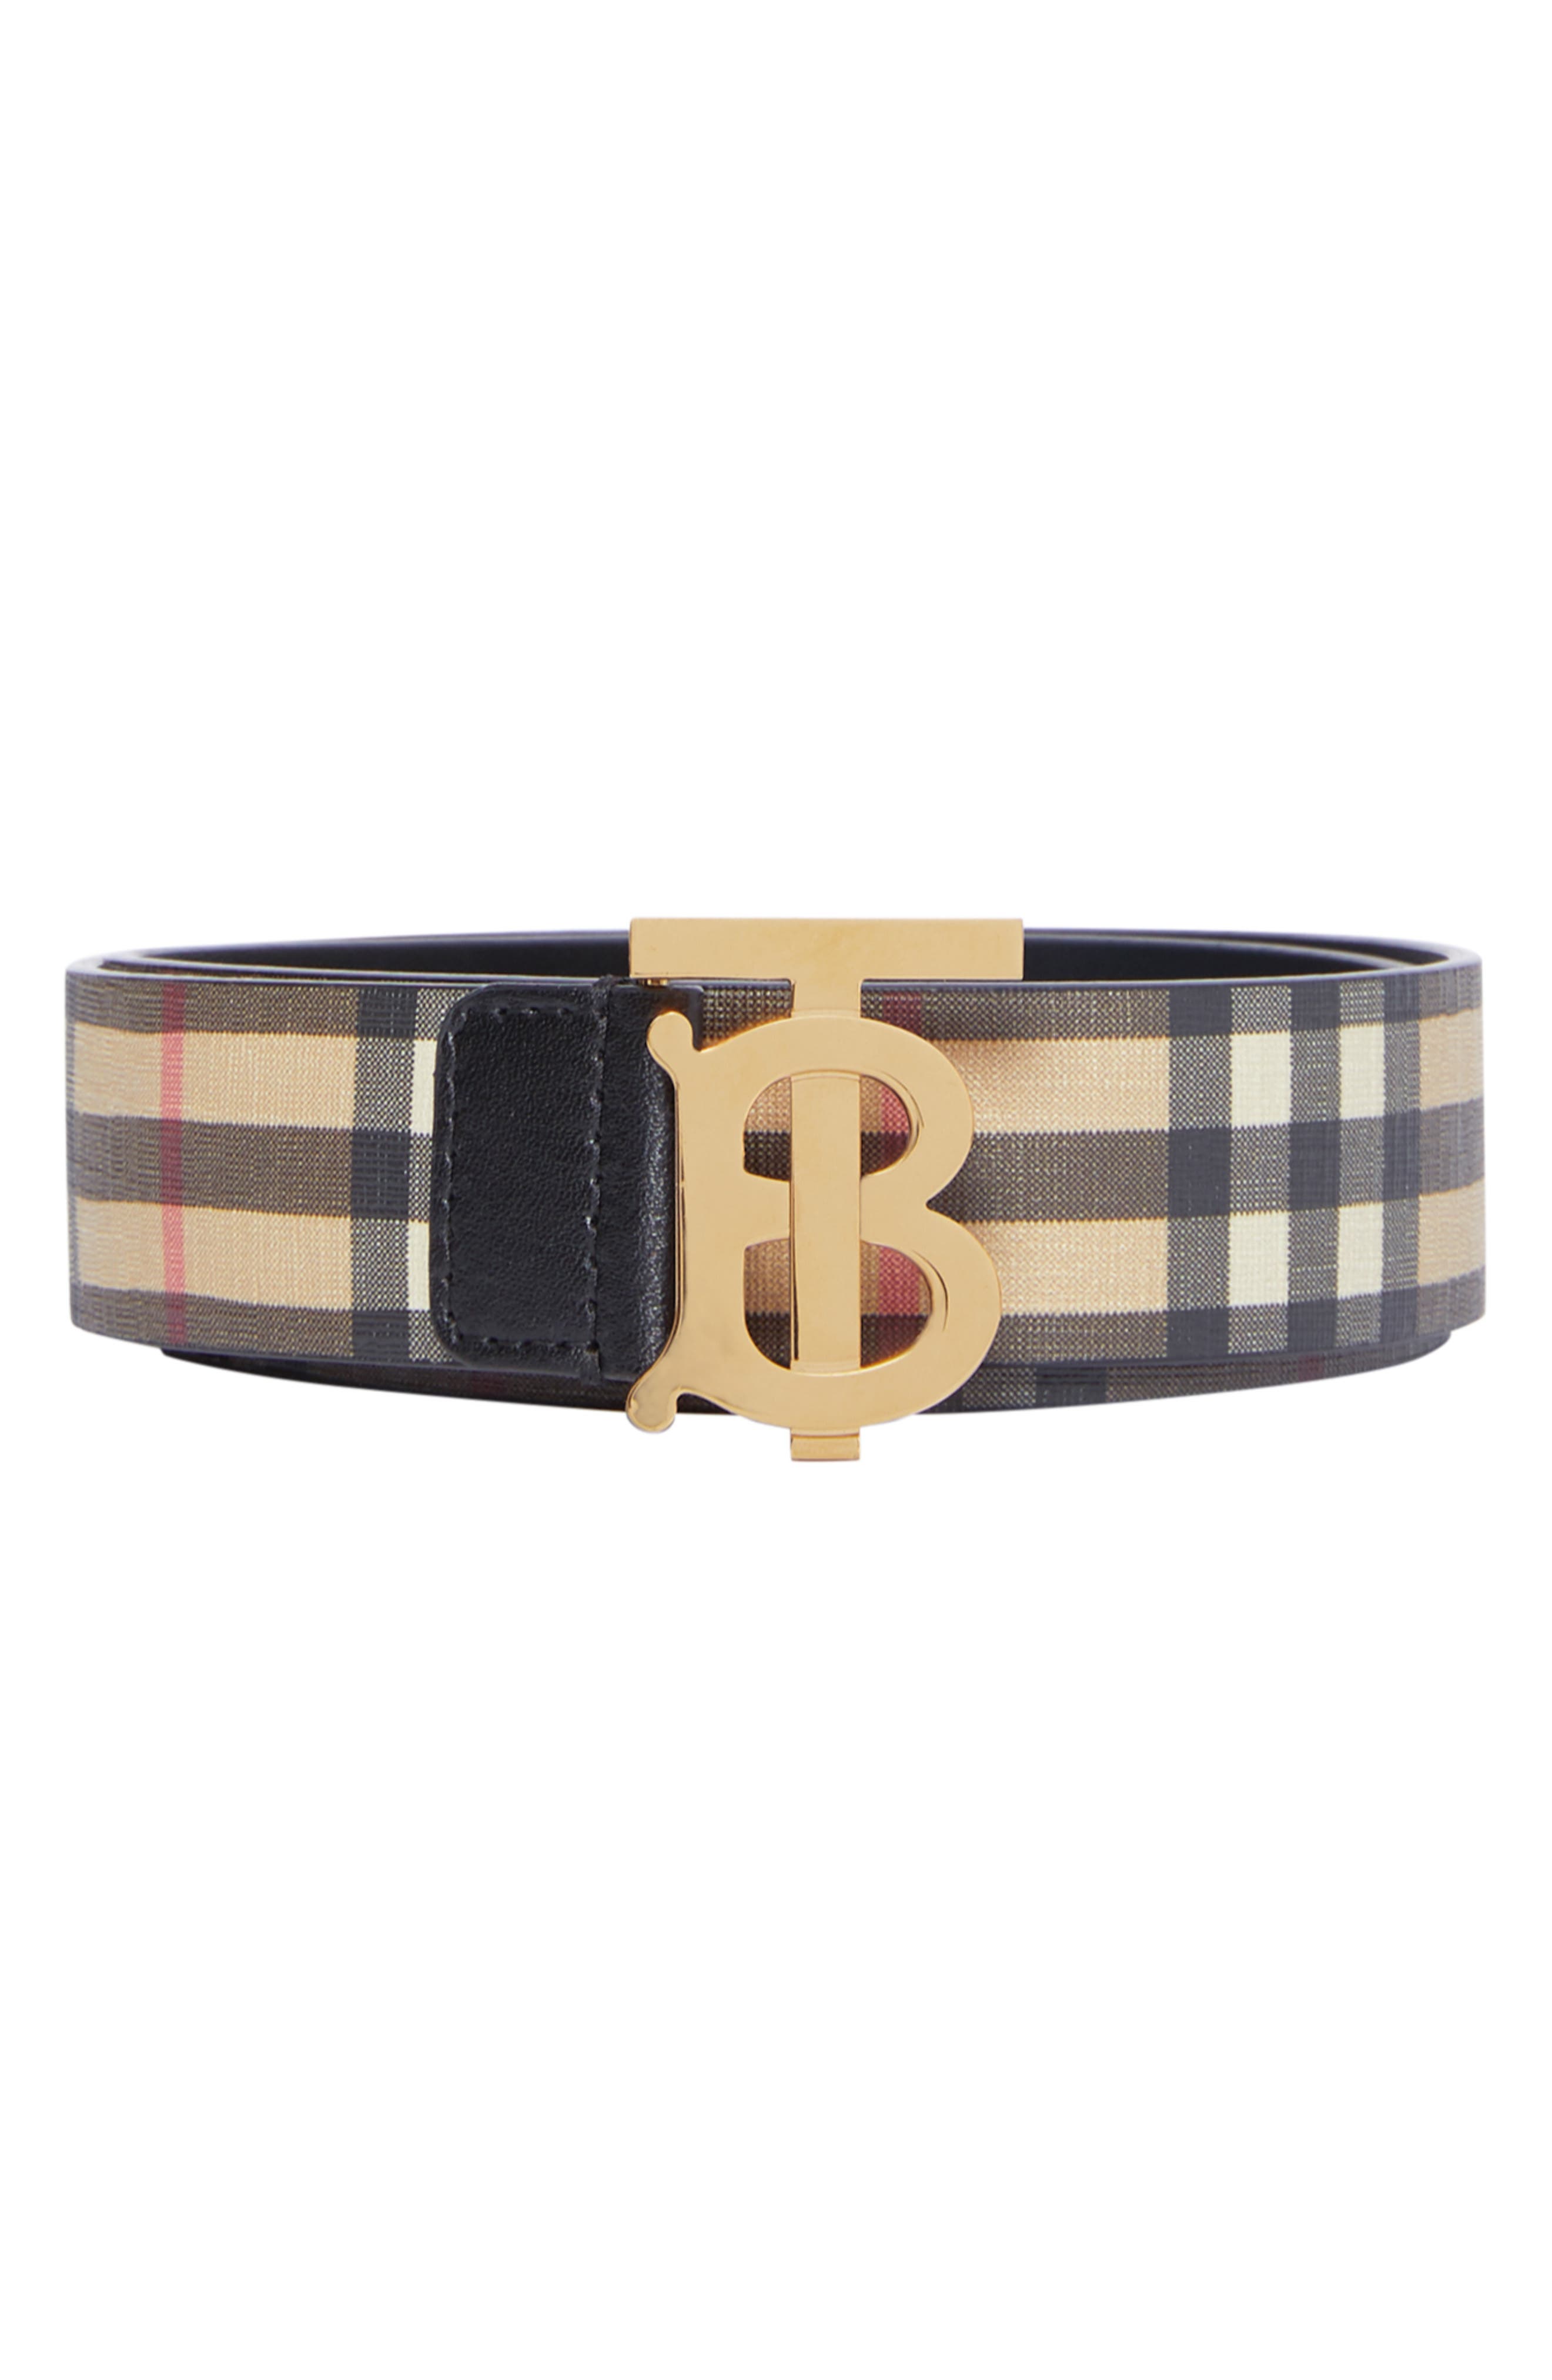 burberry belt womens sale